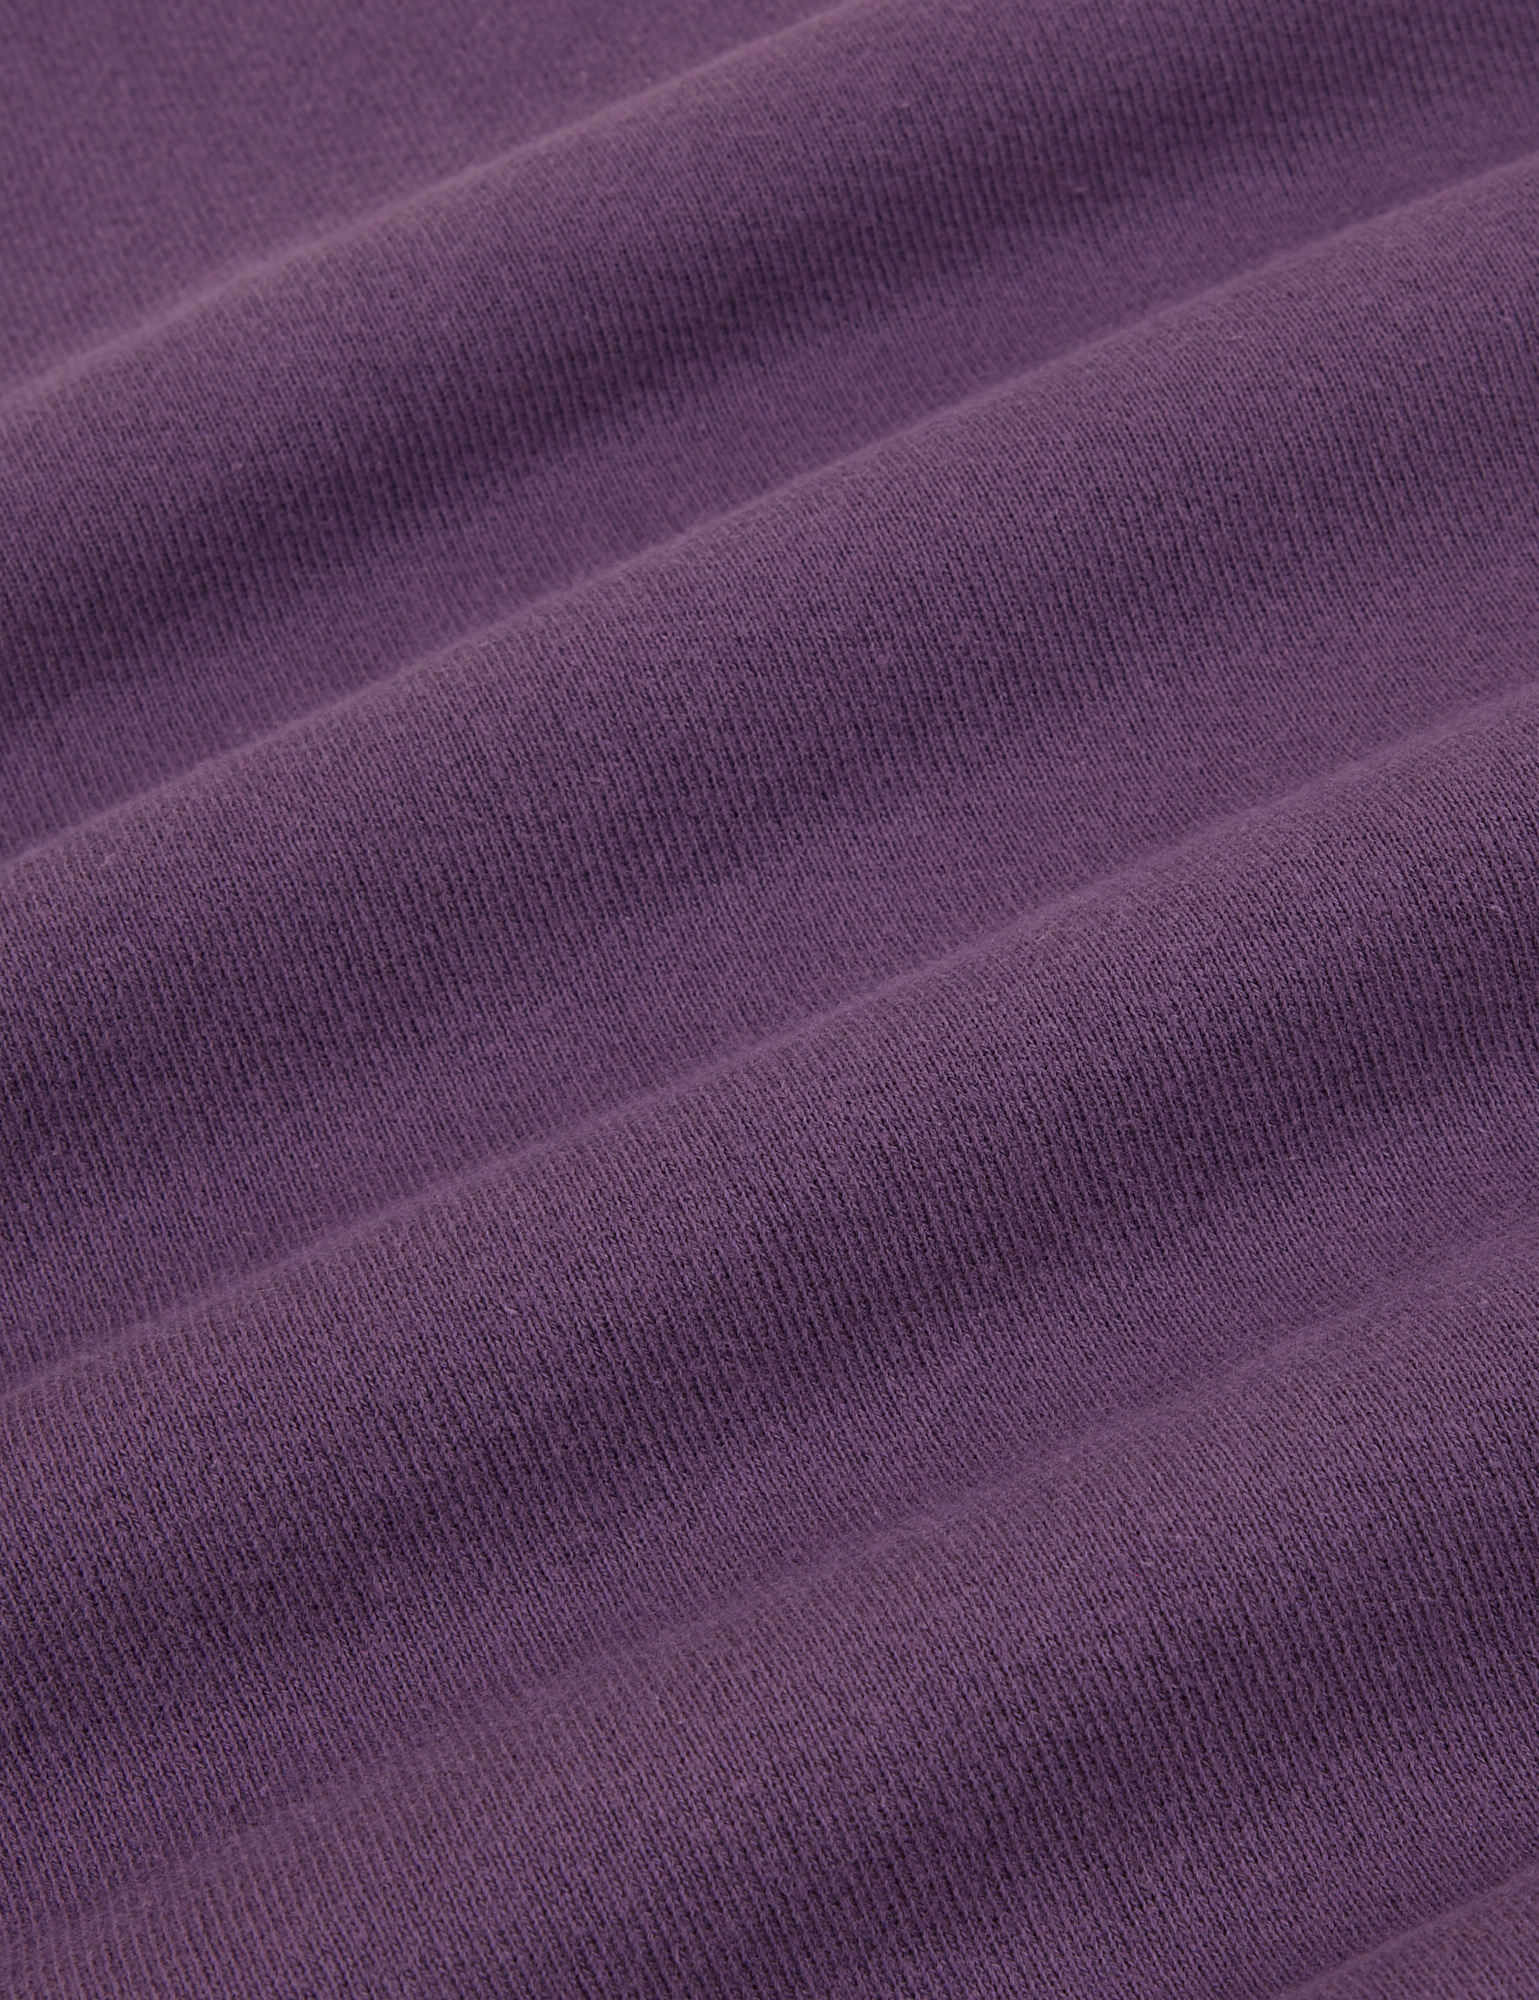 Heavyweight Crew in Nebula Purple fabric detail close up